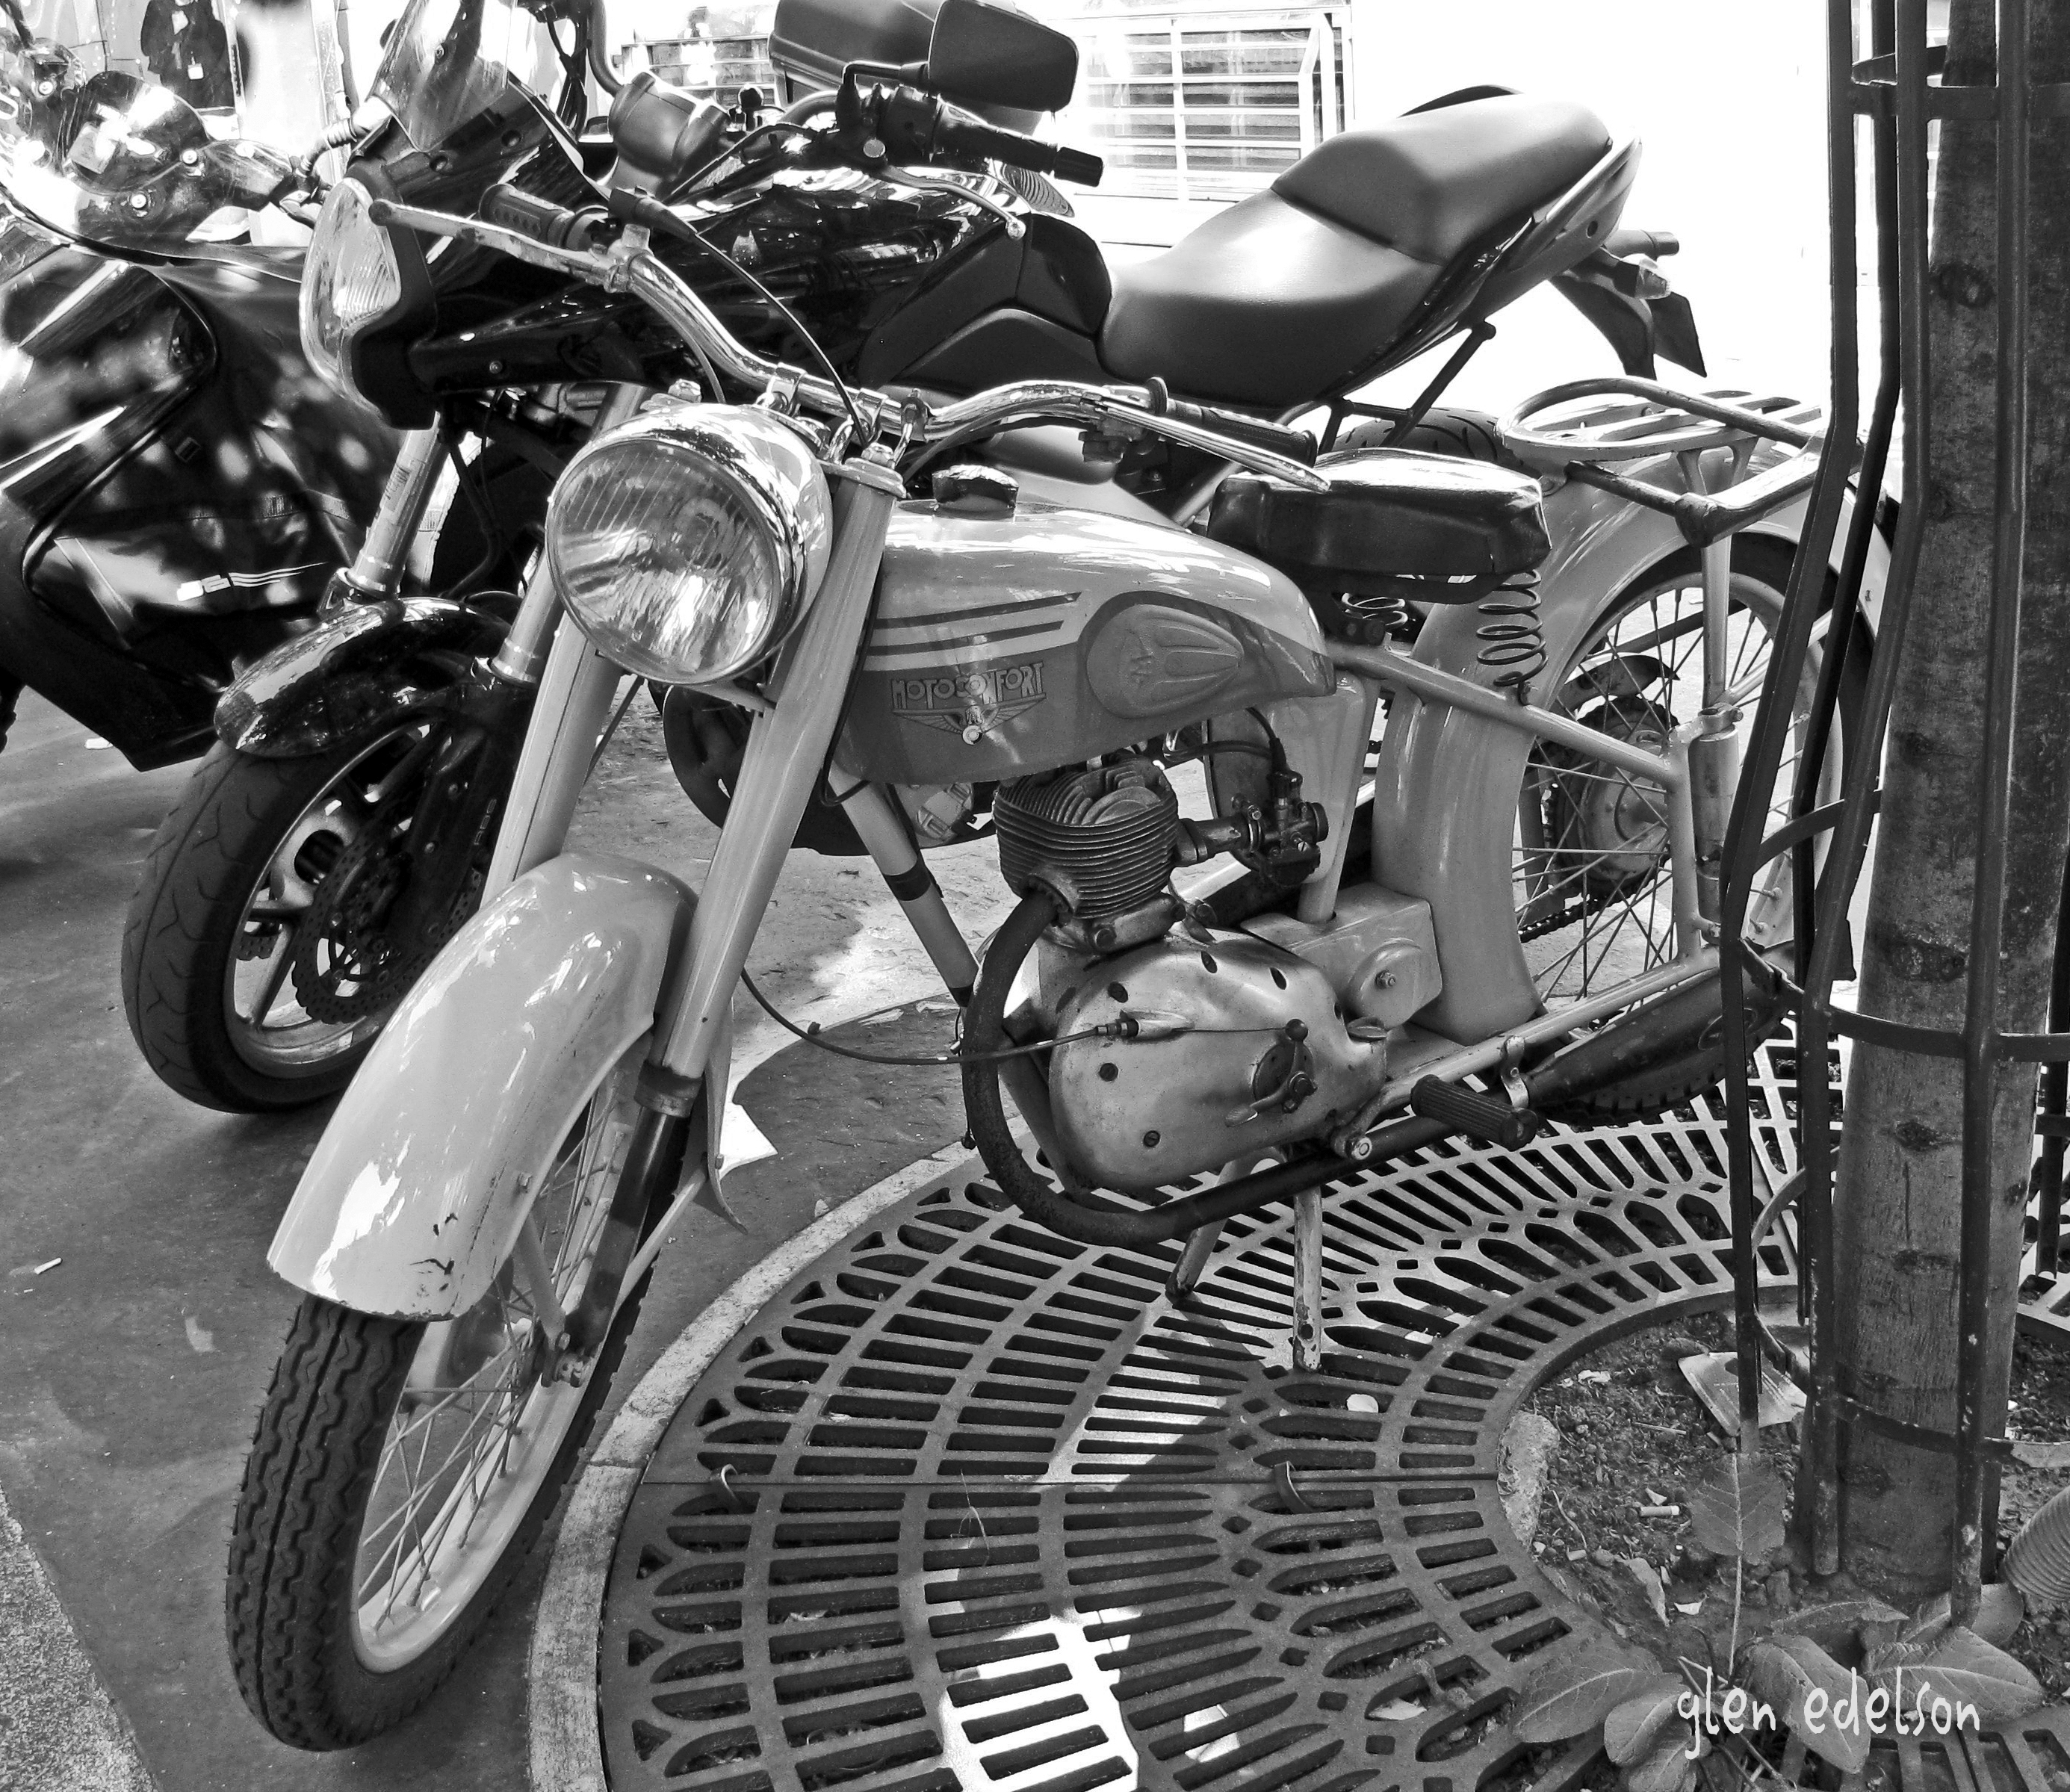 Old Motorcycle Paris France (3588281297)